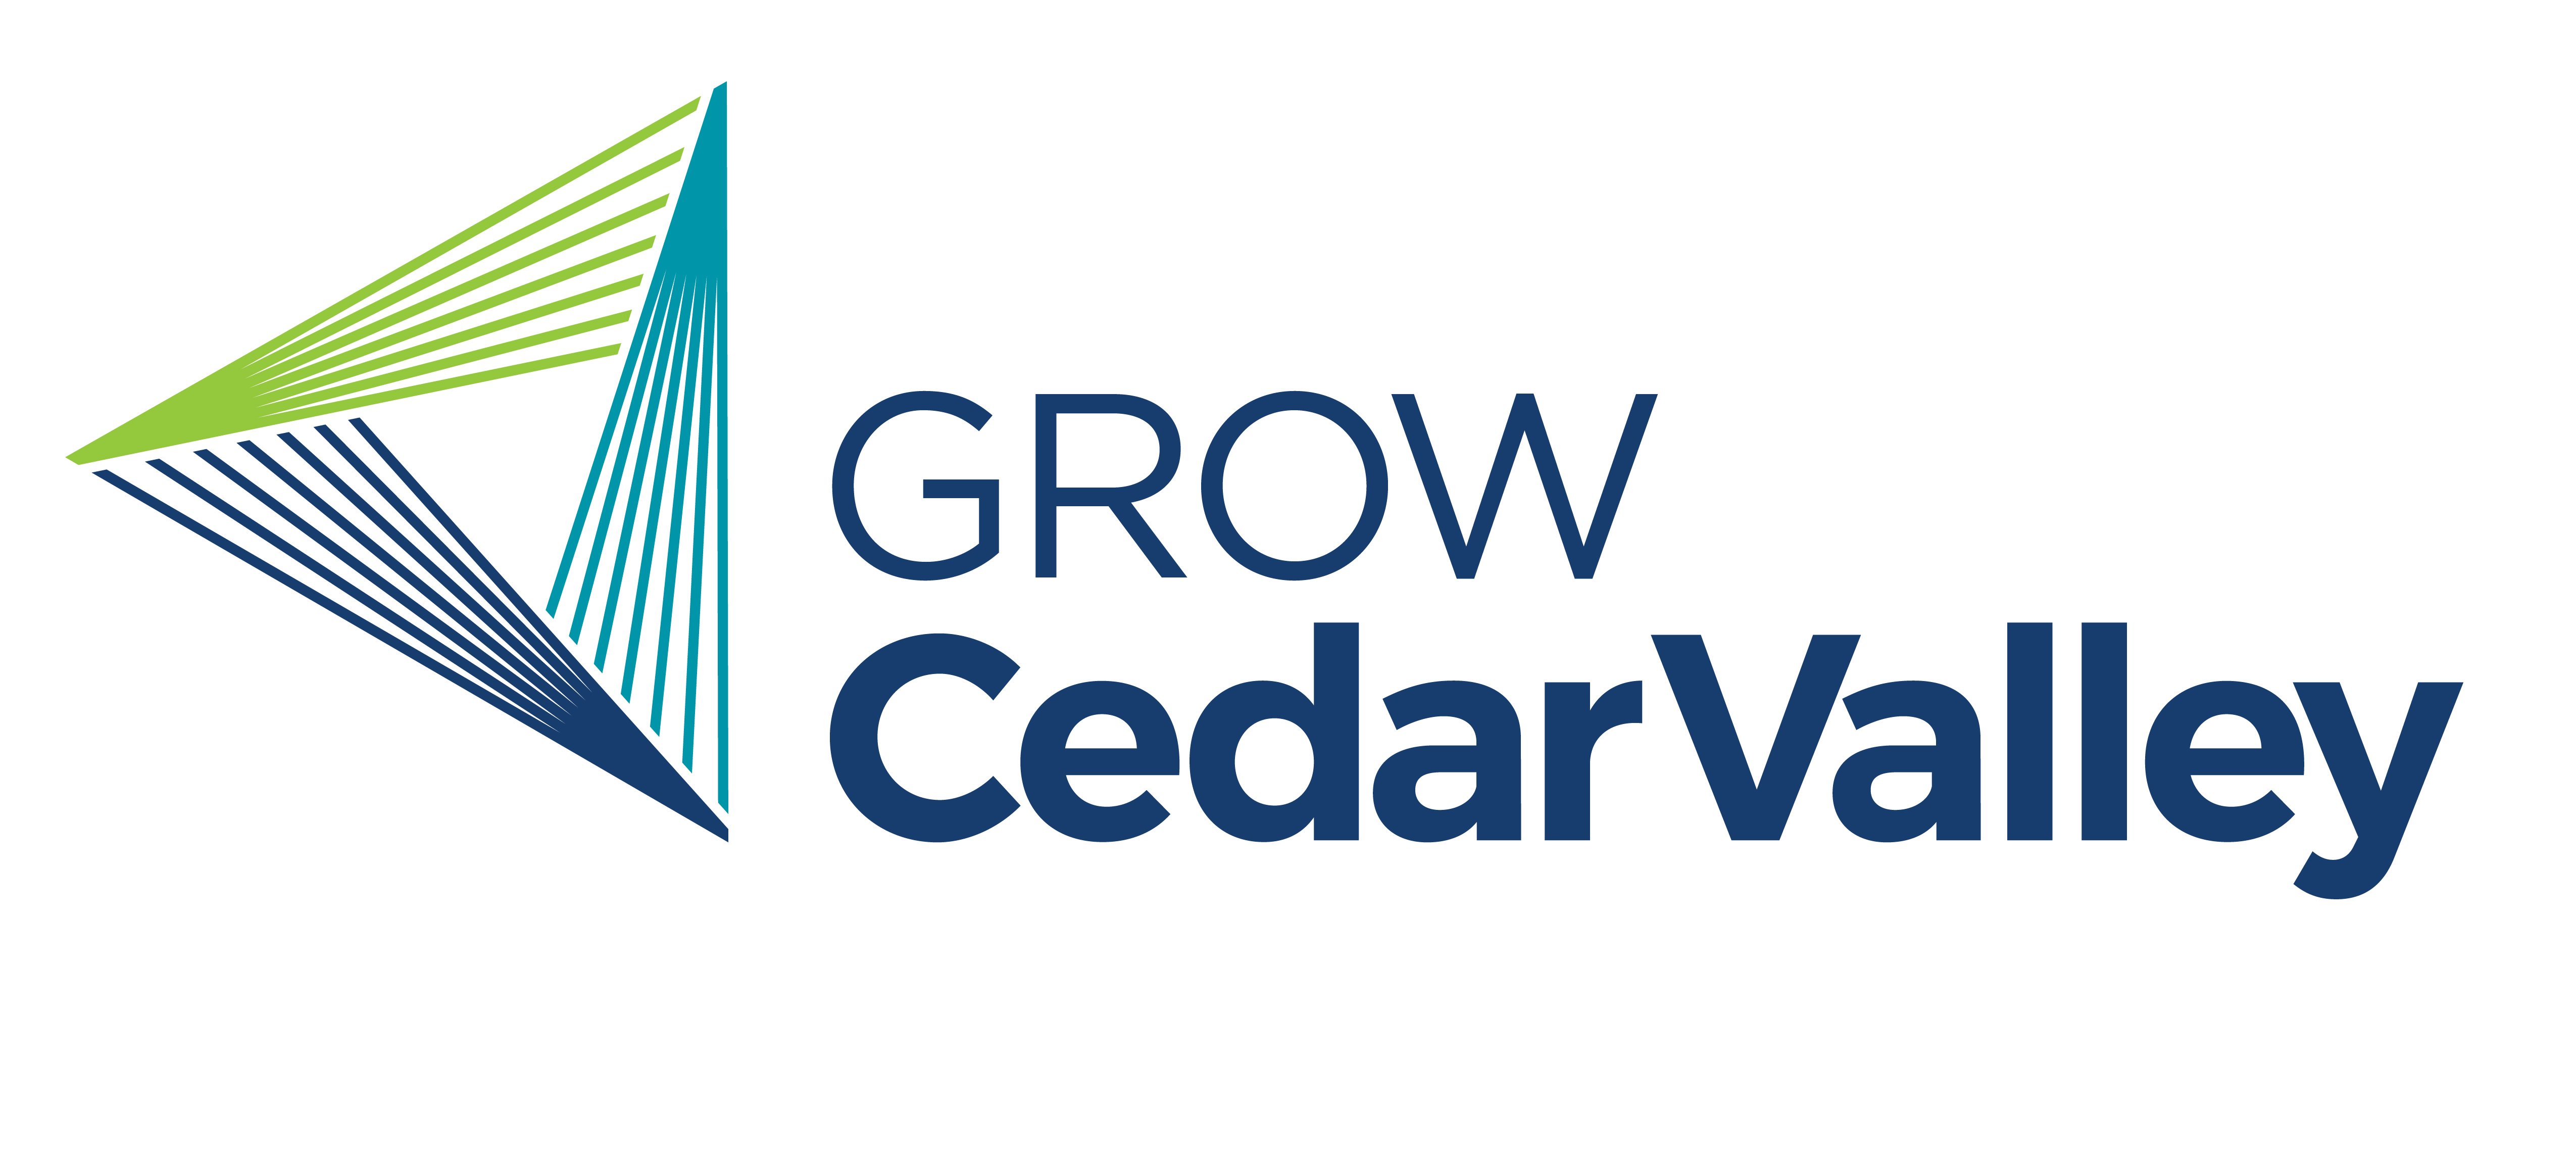 Grow Cedar Valley_Final_Grow Cedar Valley_Horizontal_Full Color